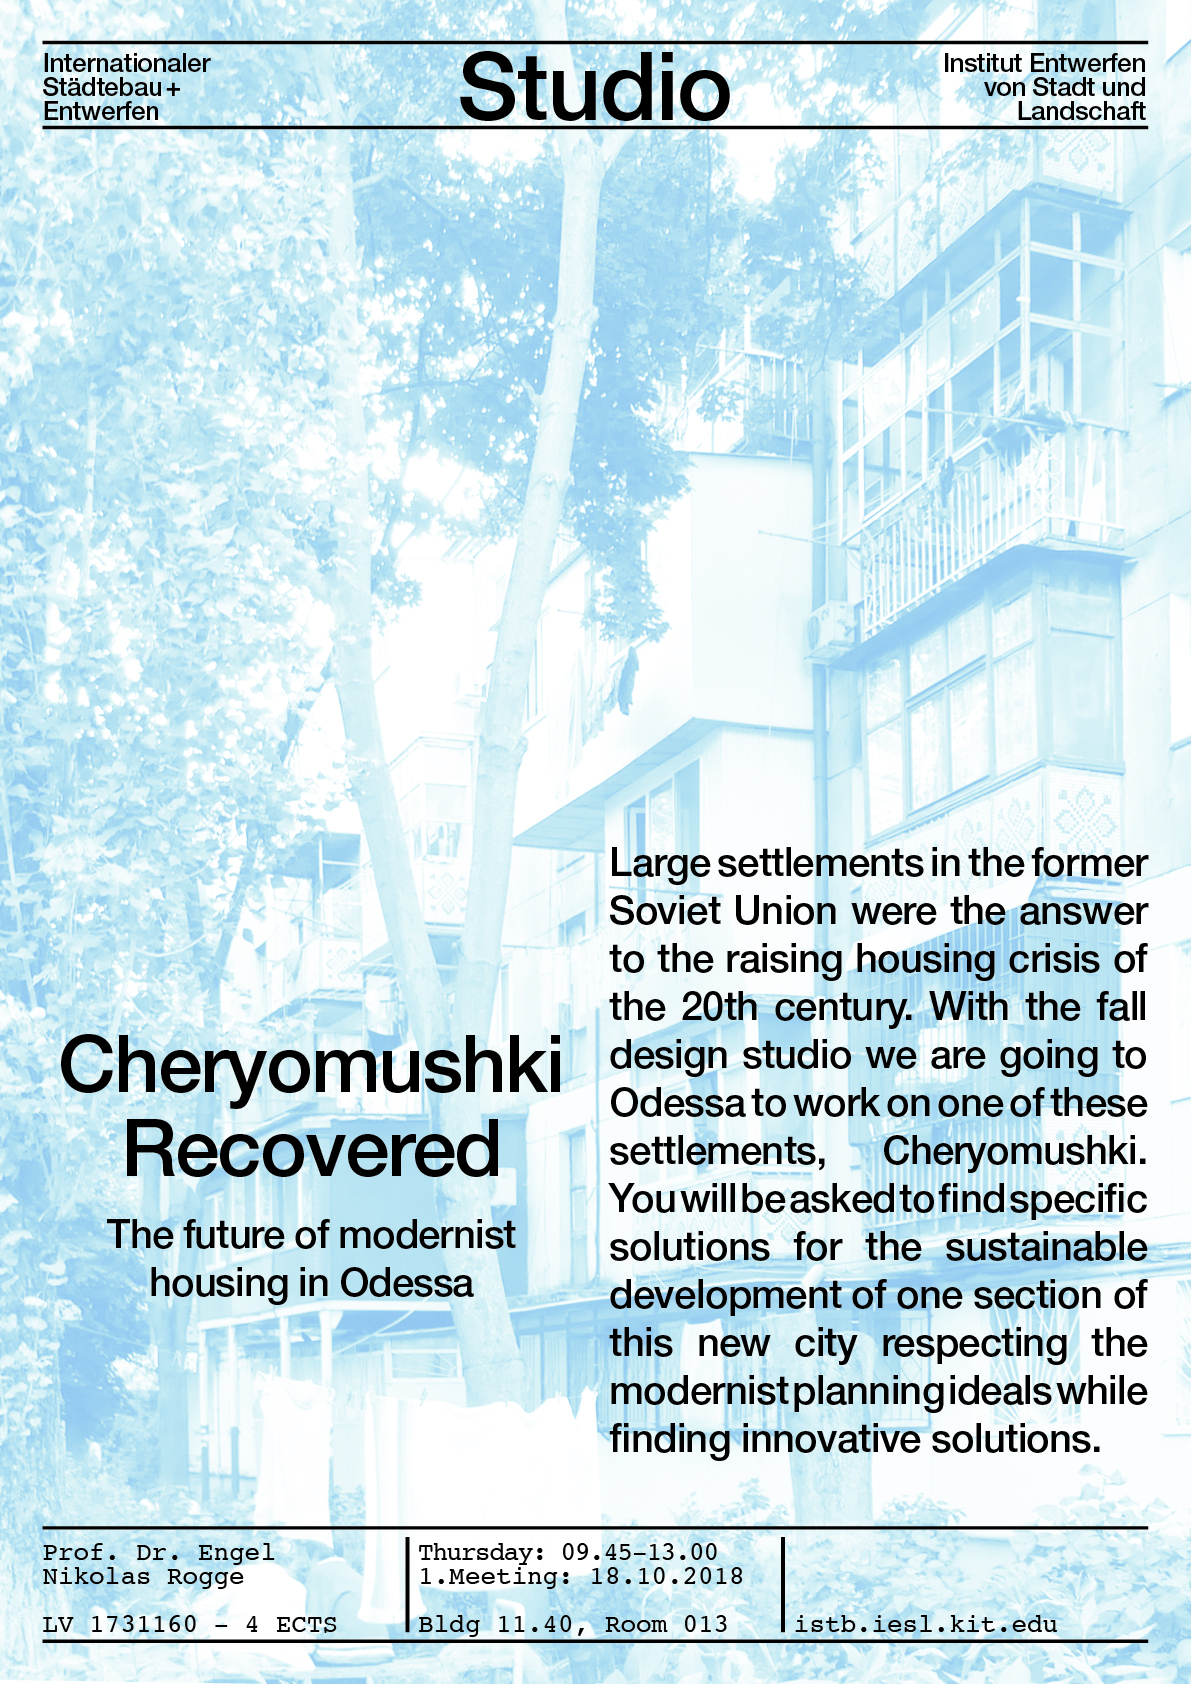 Studio: Cheryomushki Recovered - The future of modernist housing in Odessa